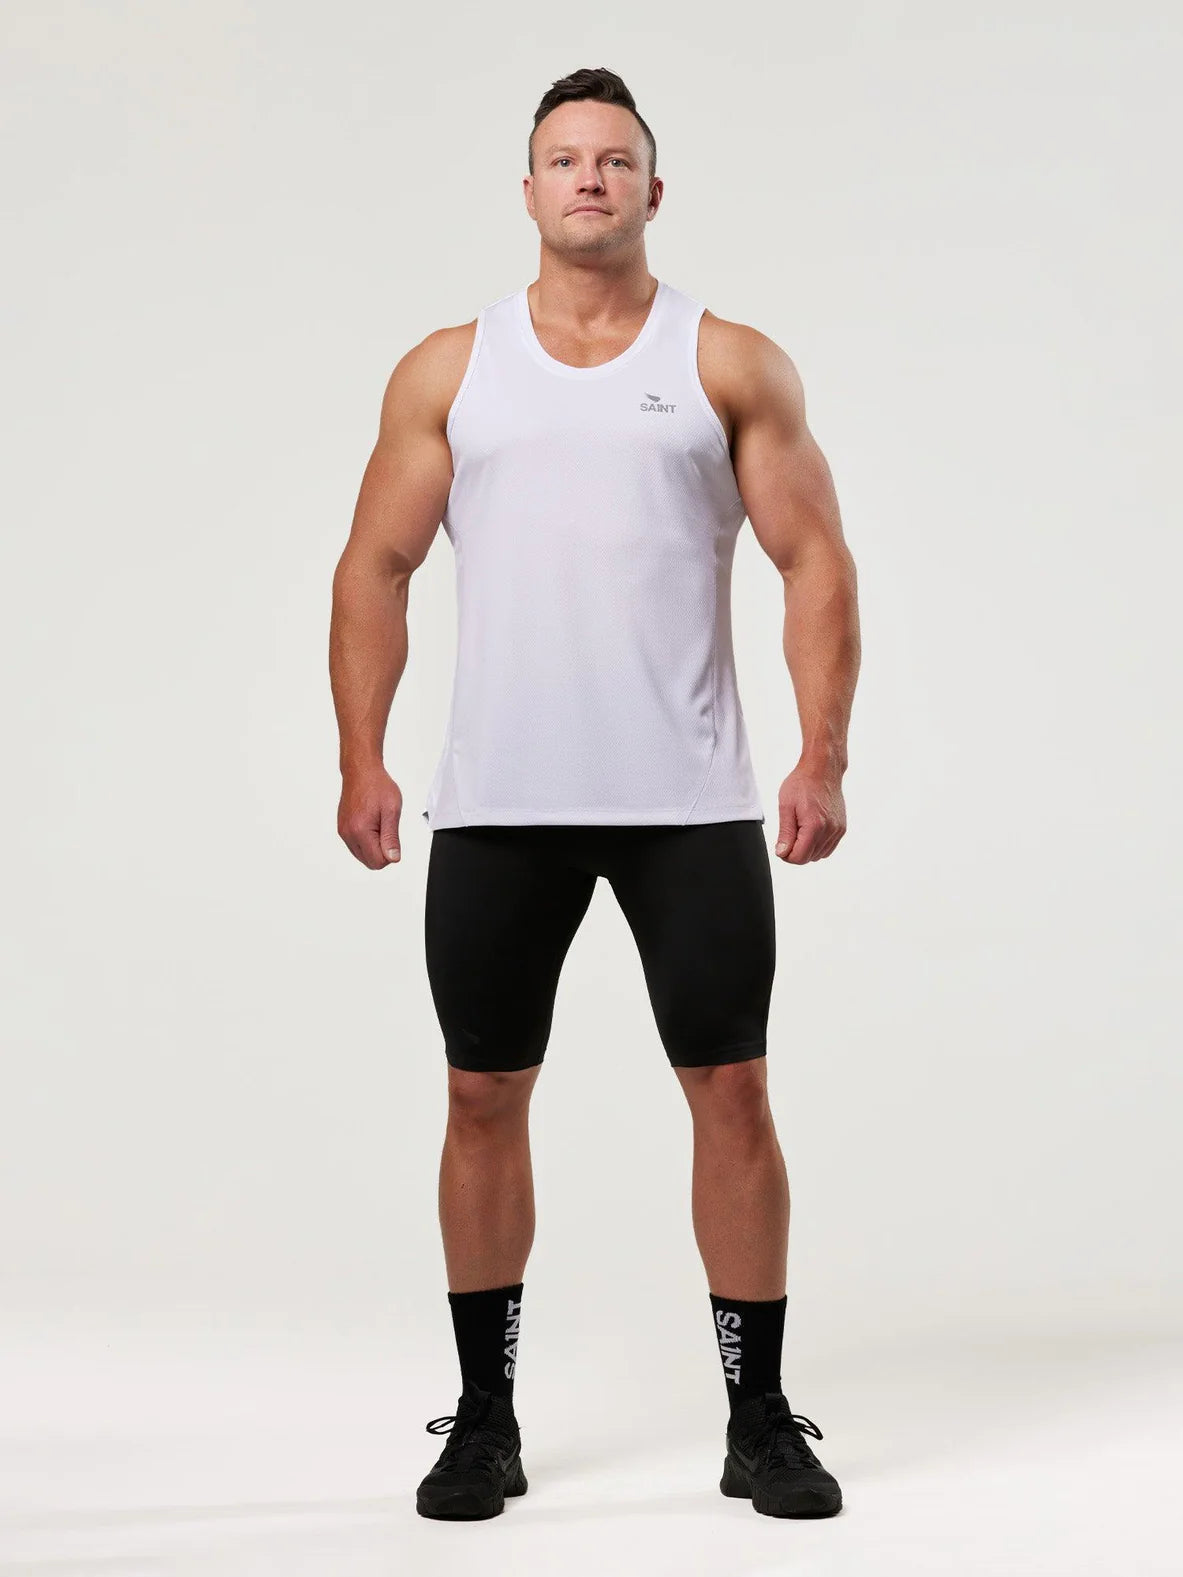 NRG - Men's Run Singlet & Compression Shorts Bundle + Free Socks